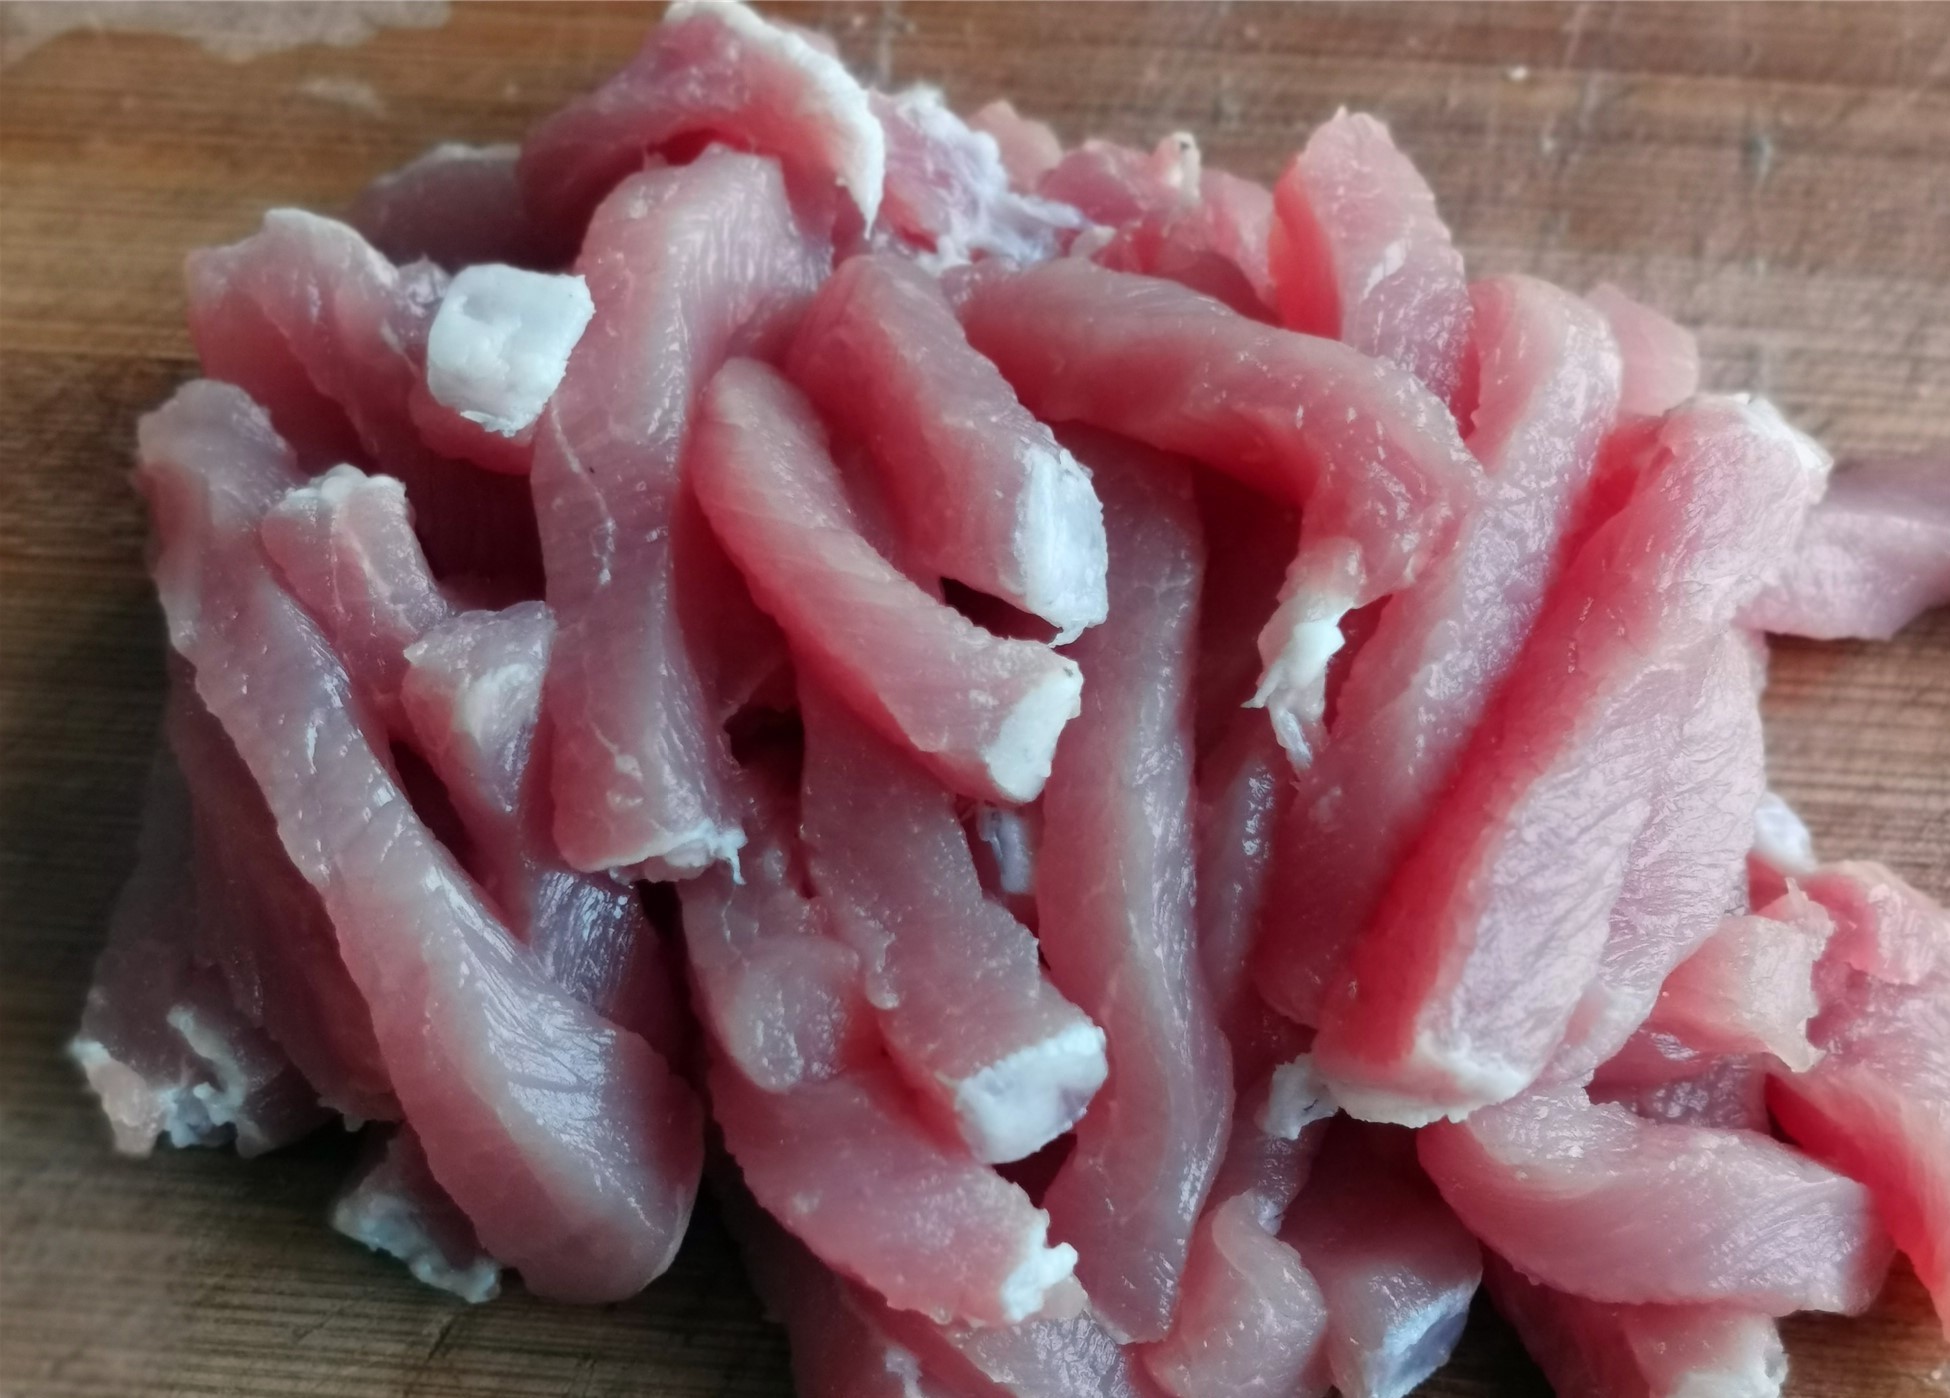 Cut the pork tenderloin into 1 cm thick slices first